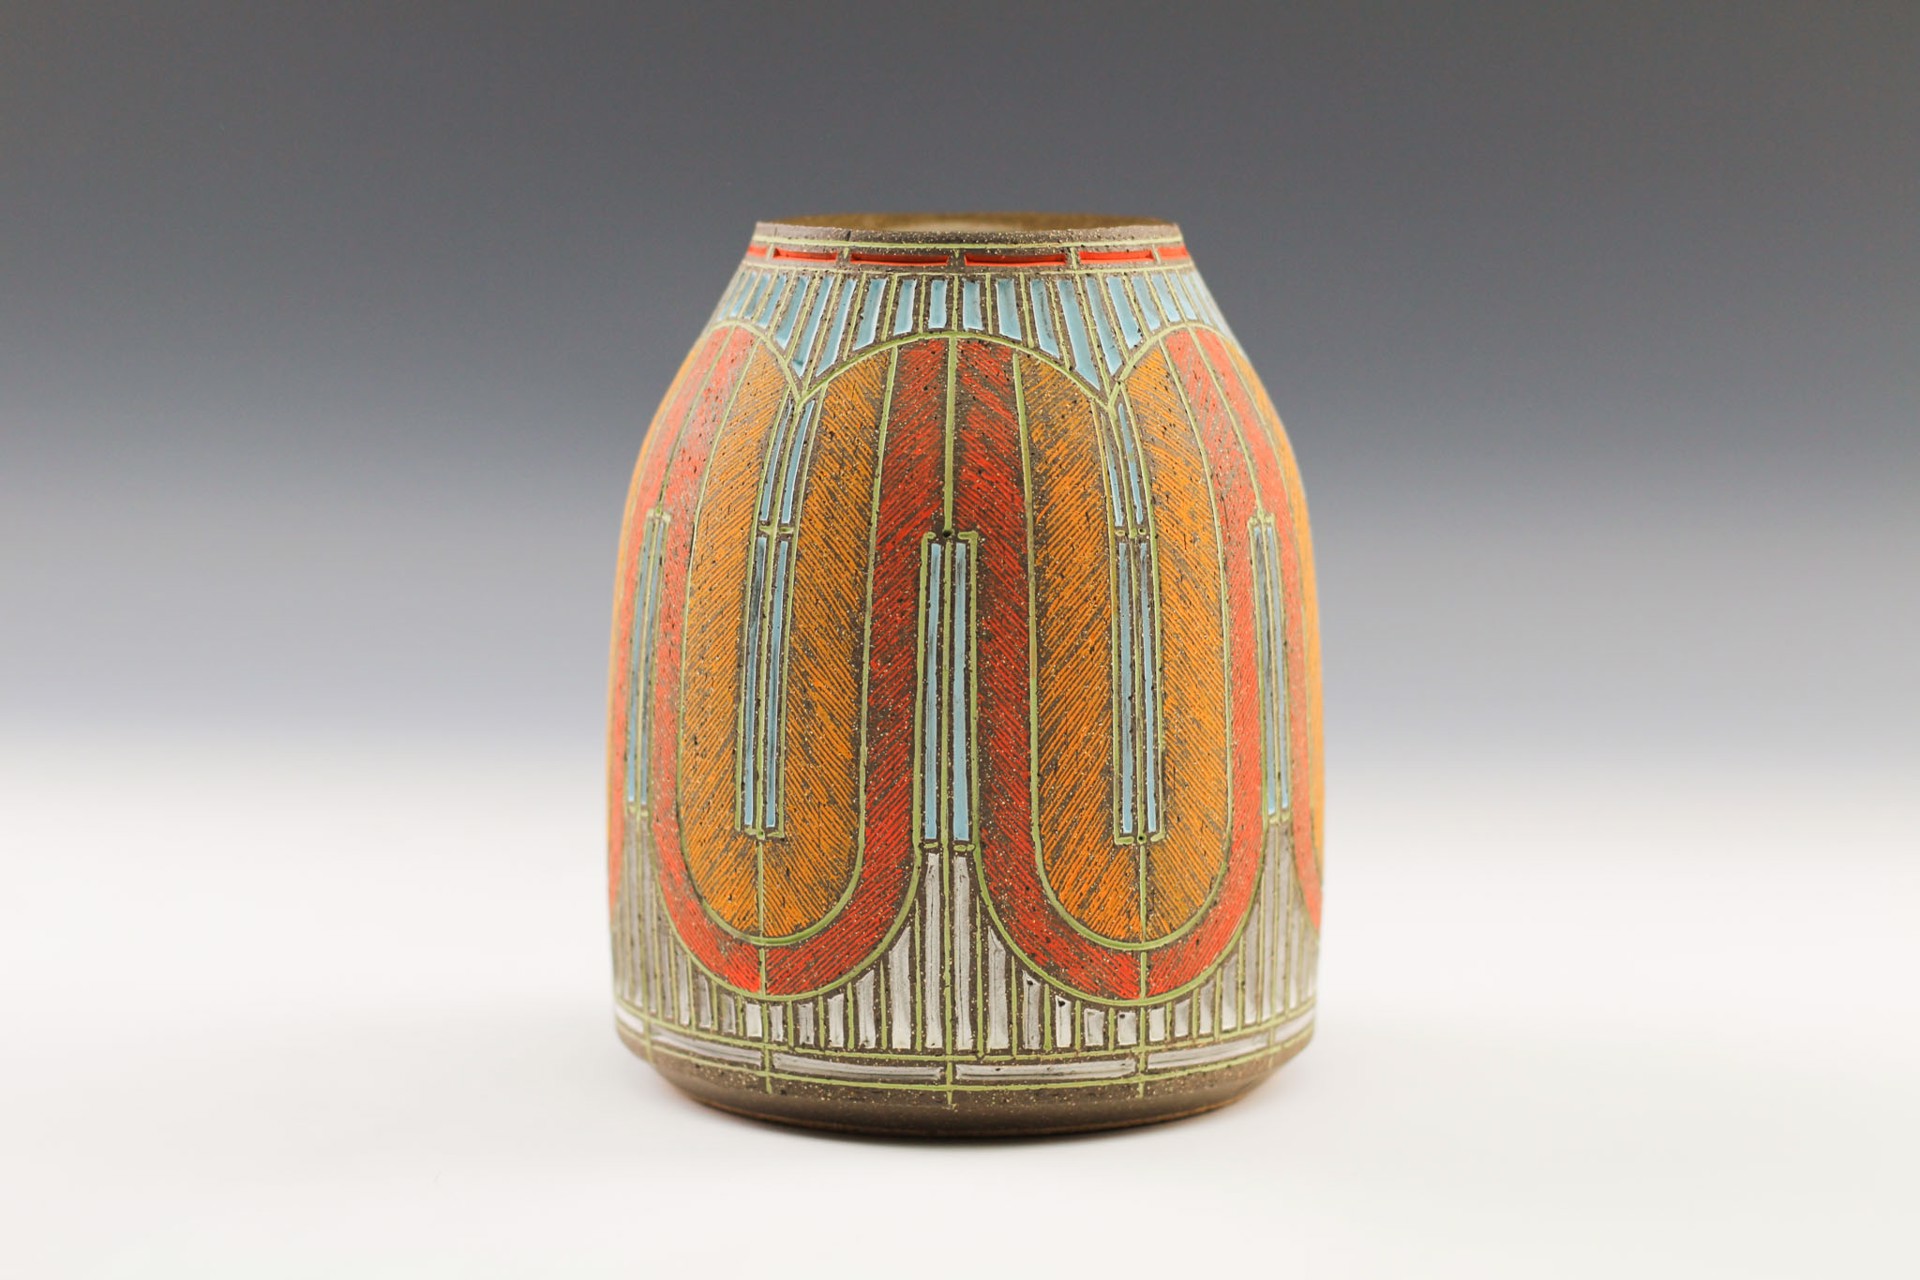 Vase by Matt Repsher